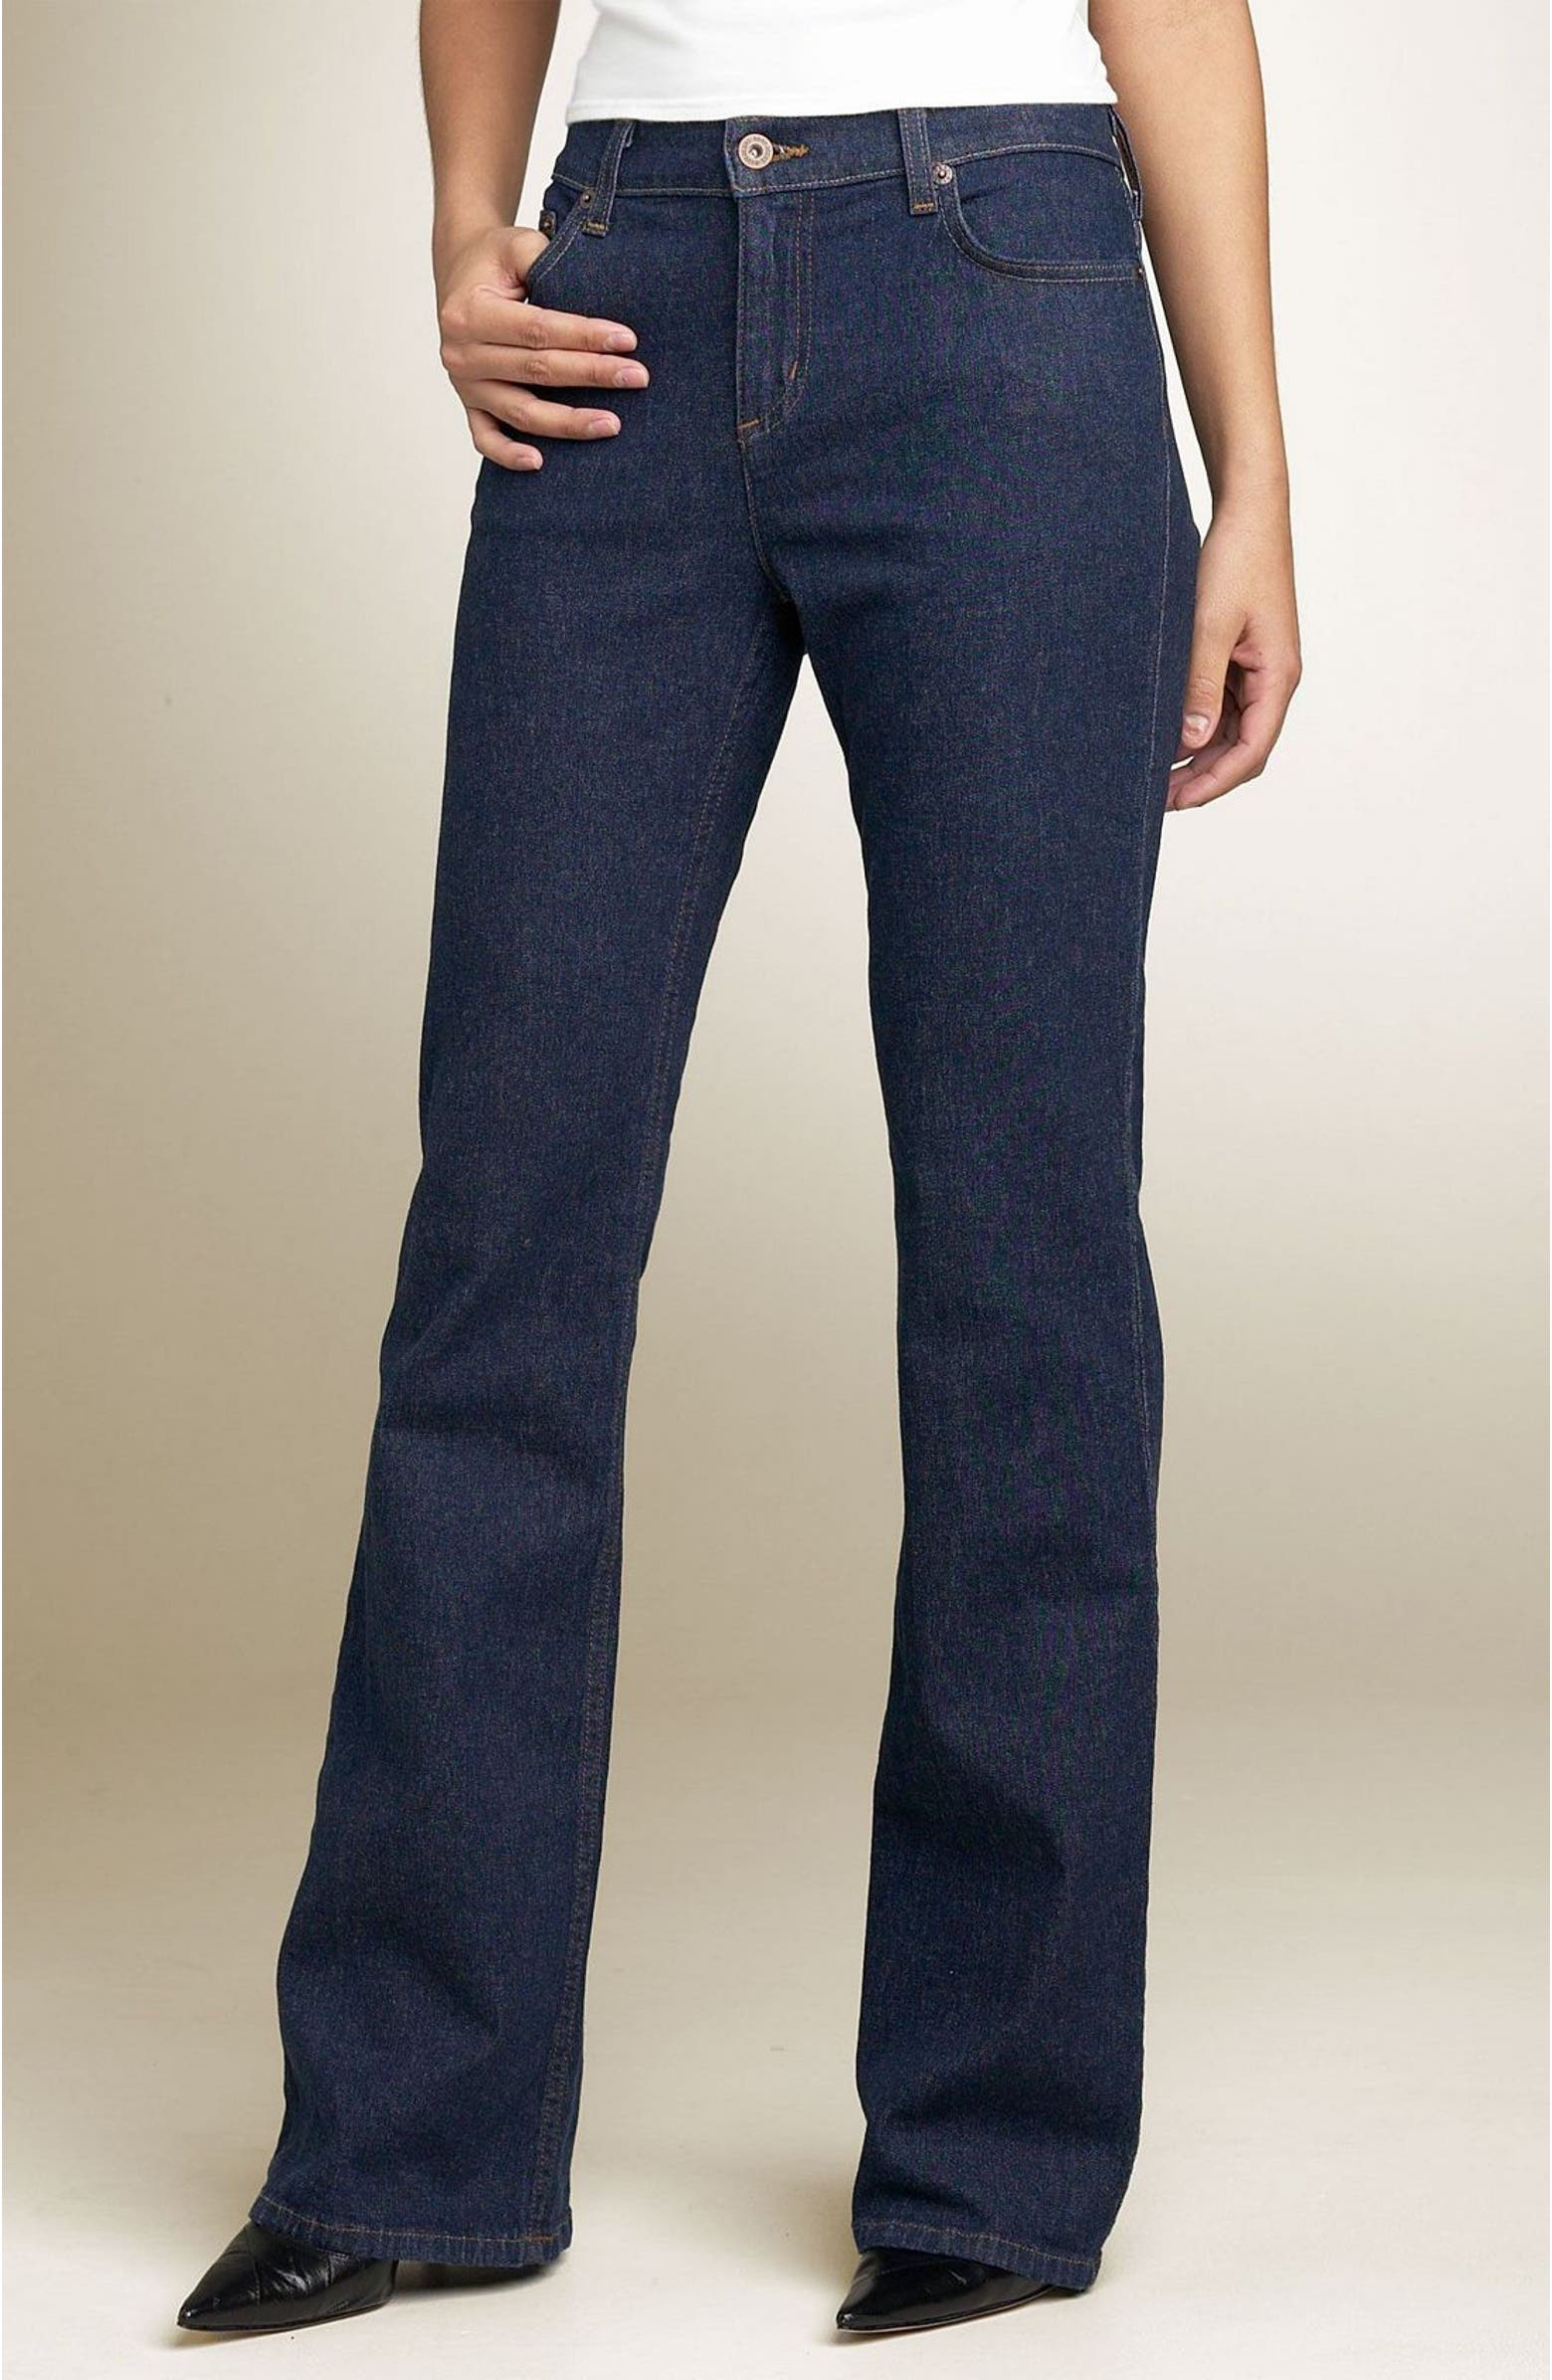 DKNY Jeans 'Soho' Stretch Jeans | Nordstrom